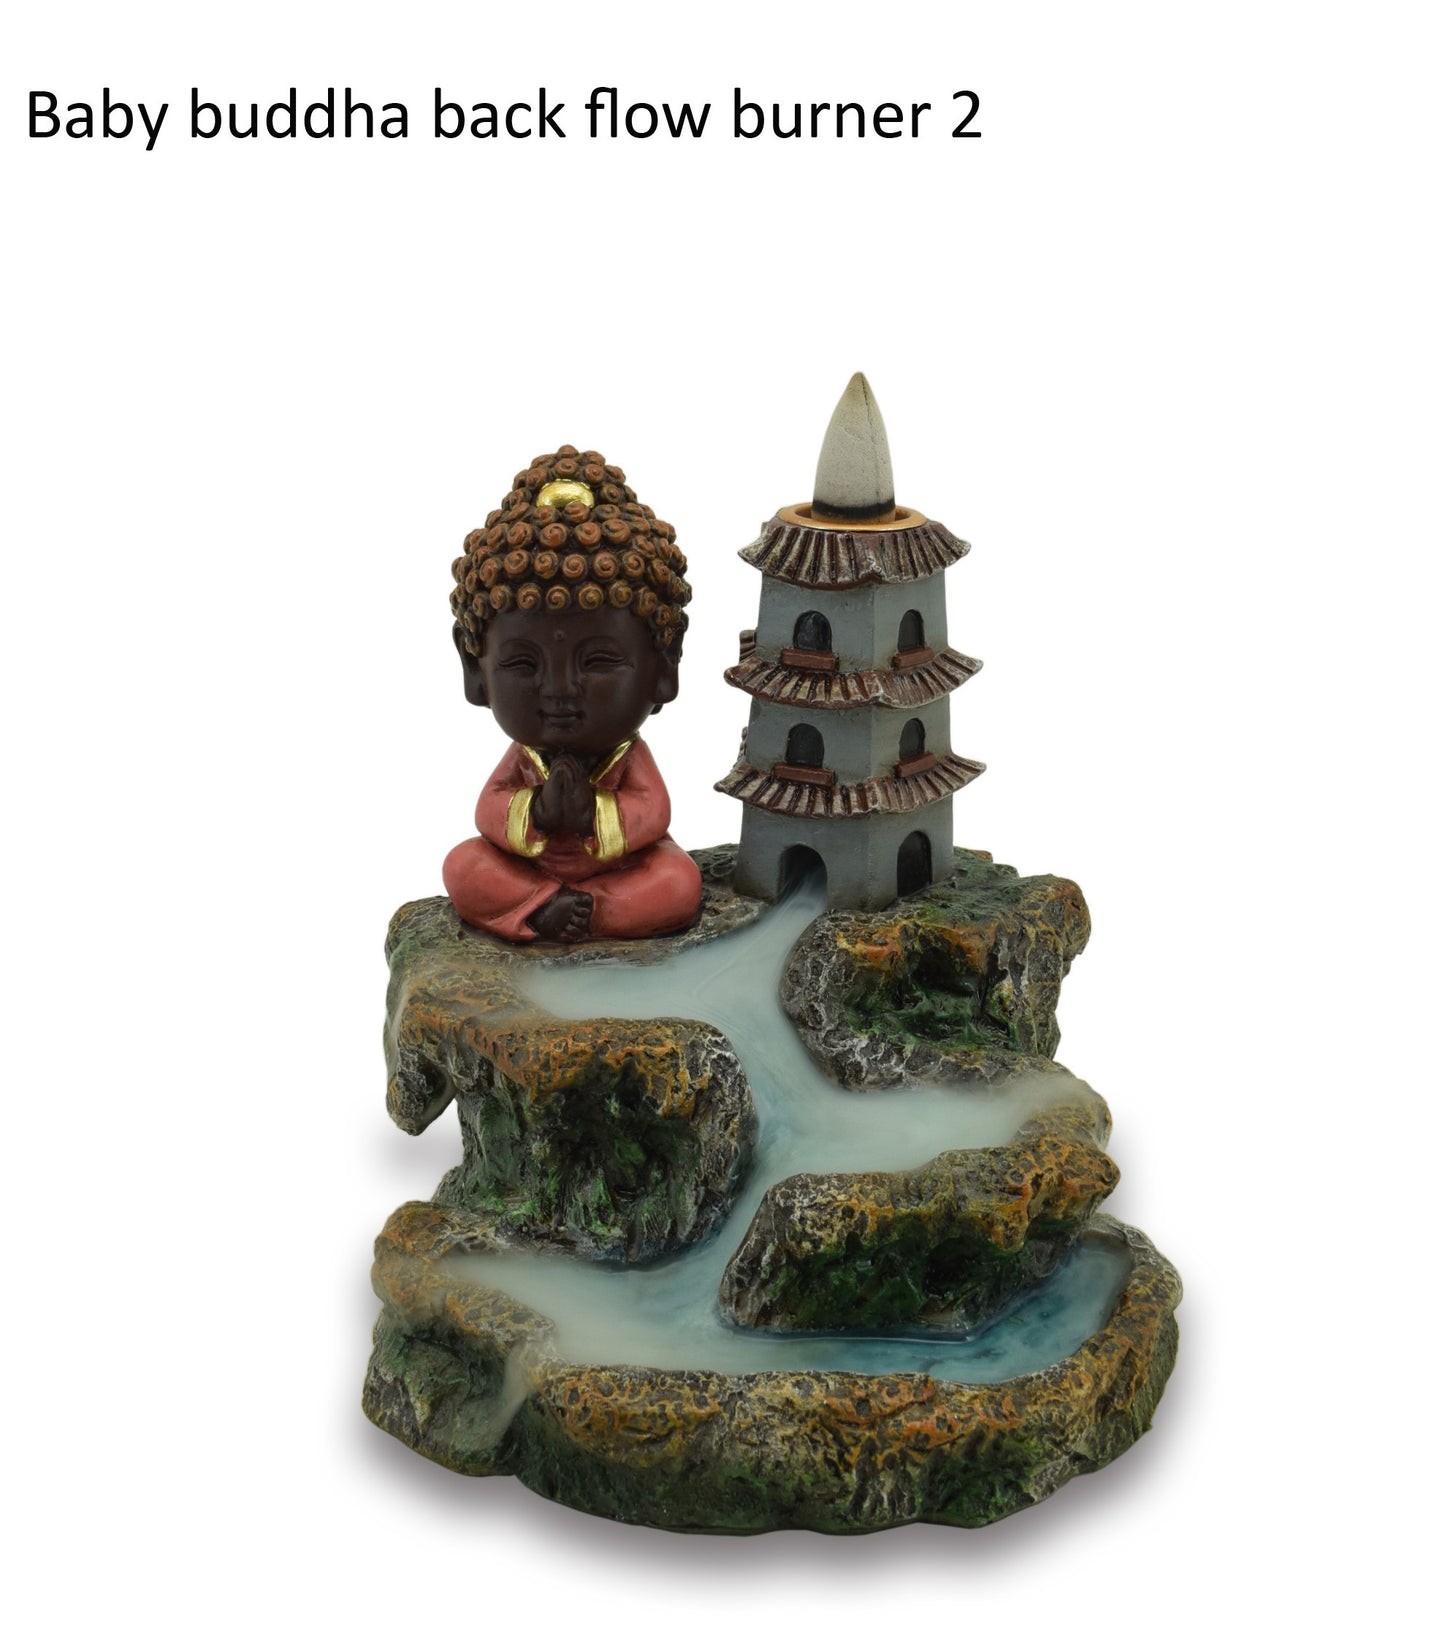 BABY BUDDHA BACK FLOW BURNER